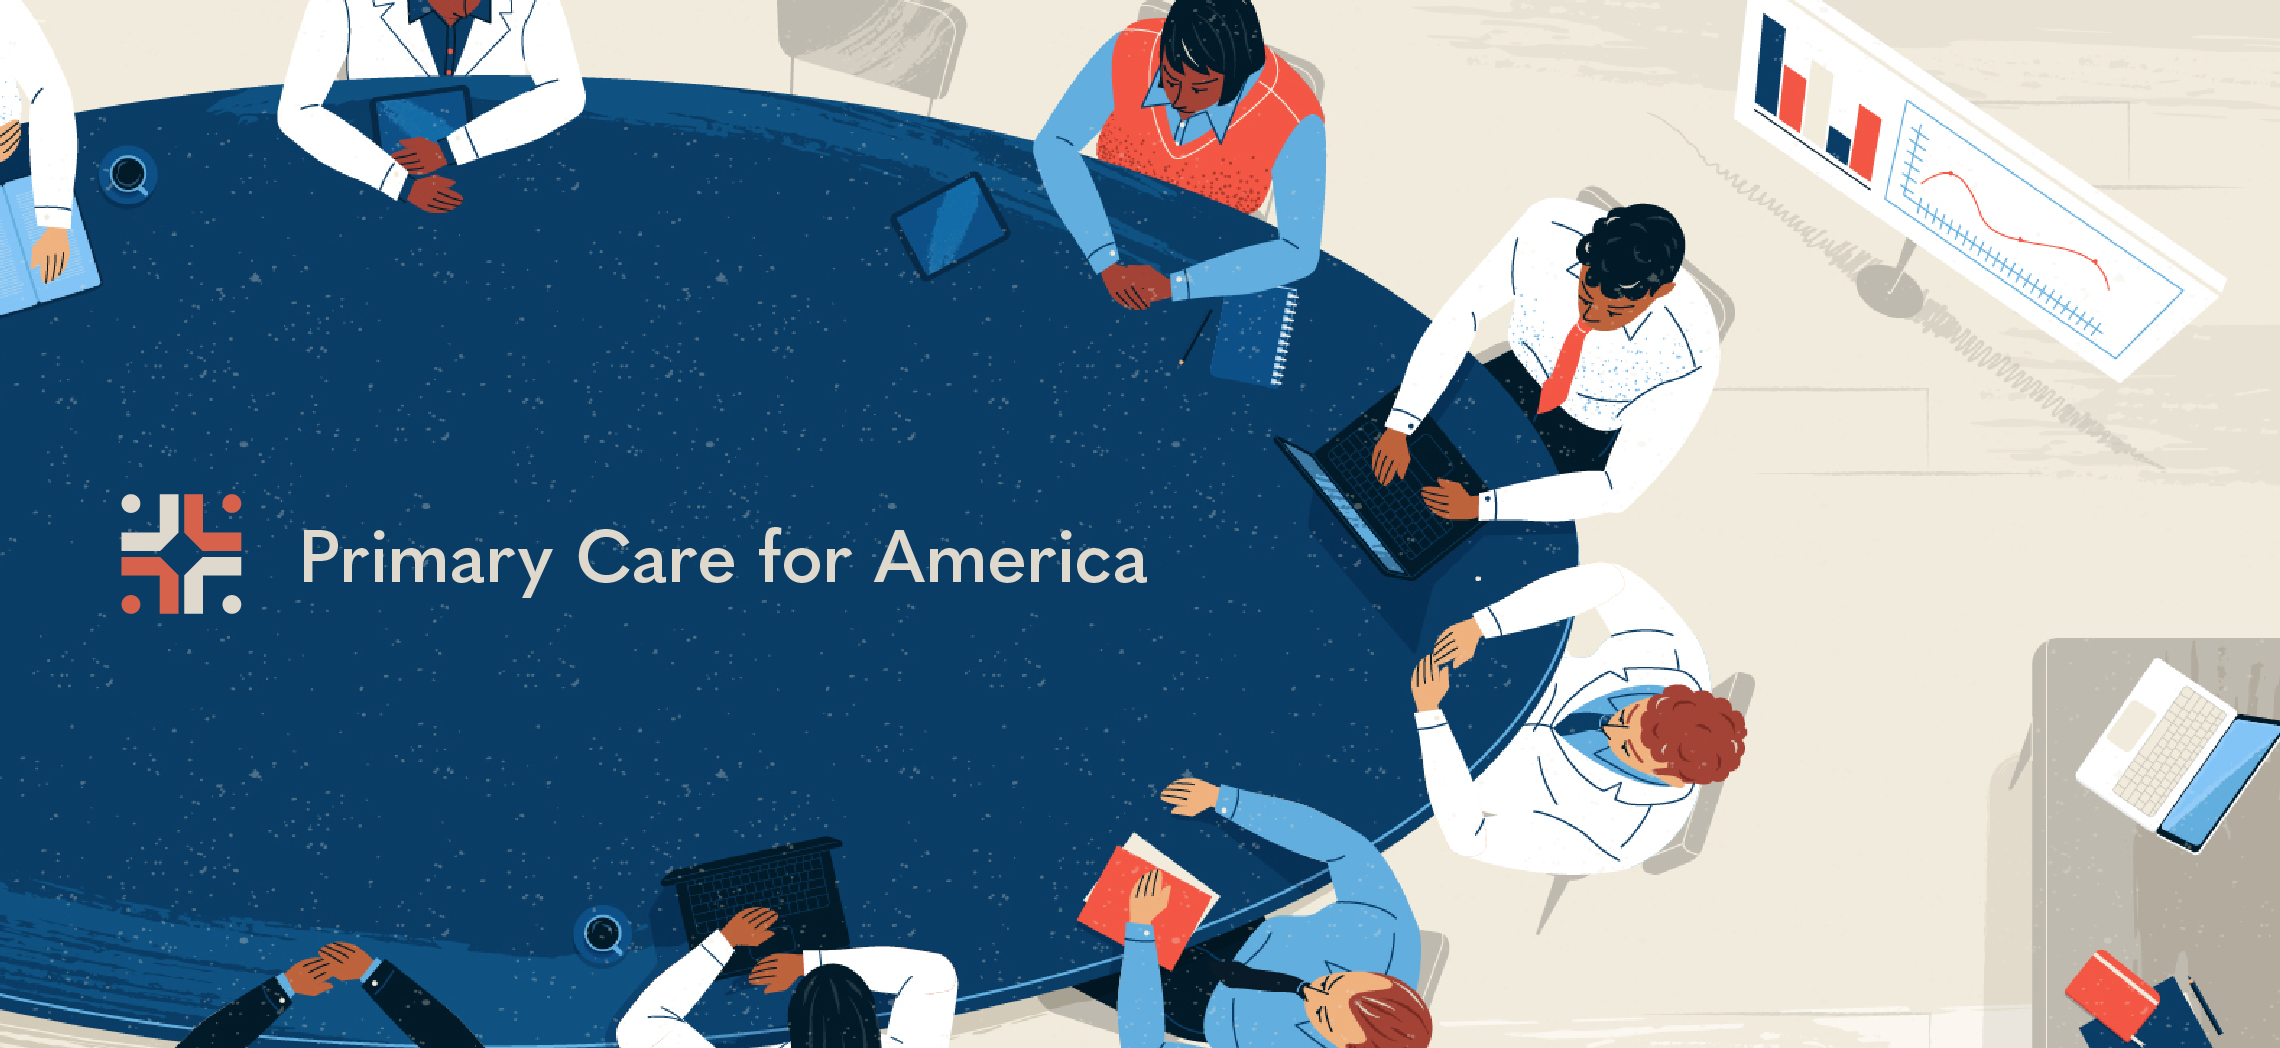 Primary Care for America